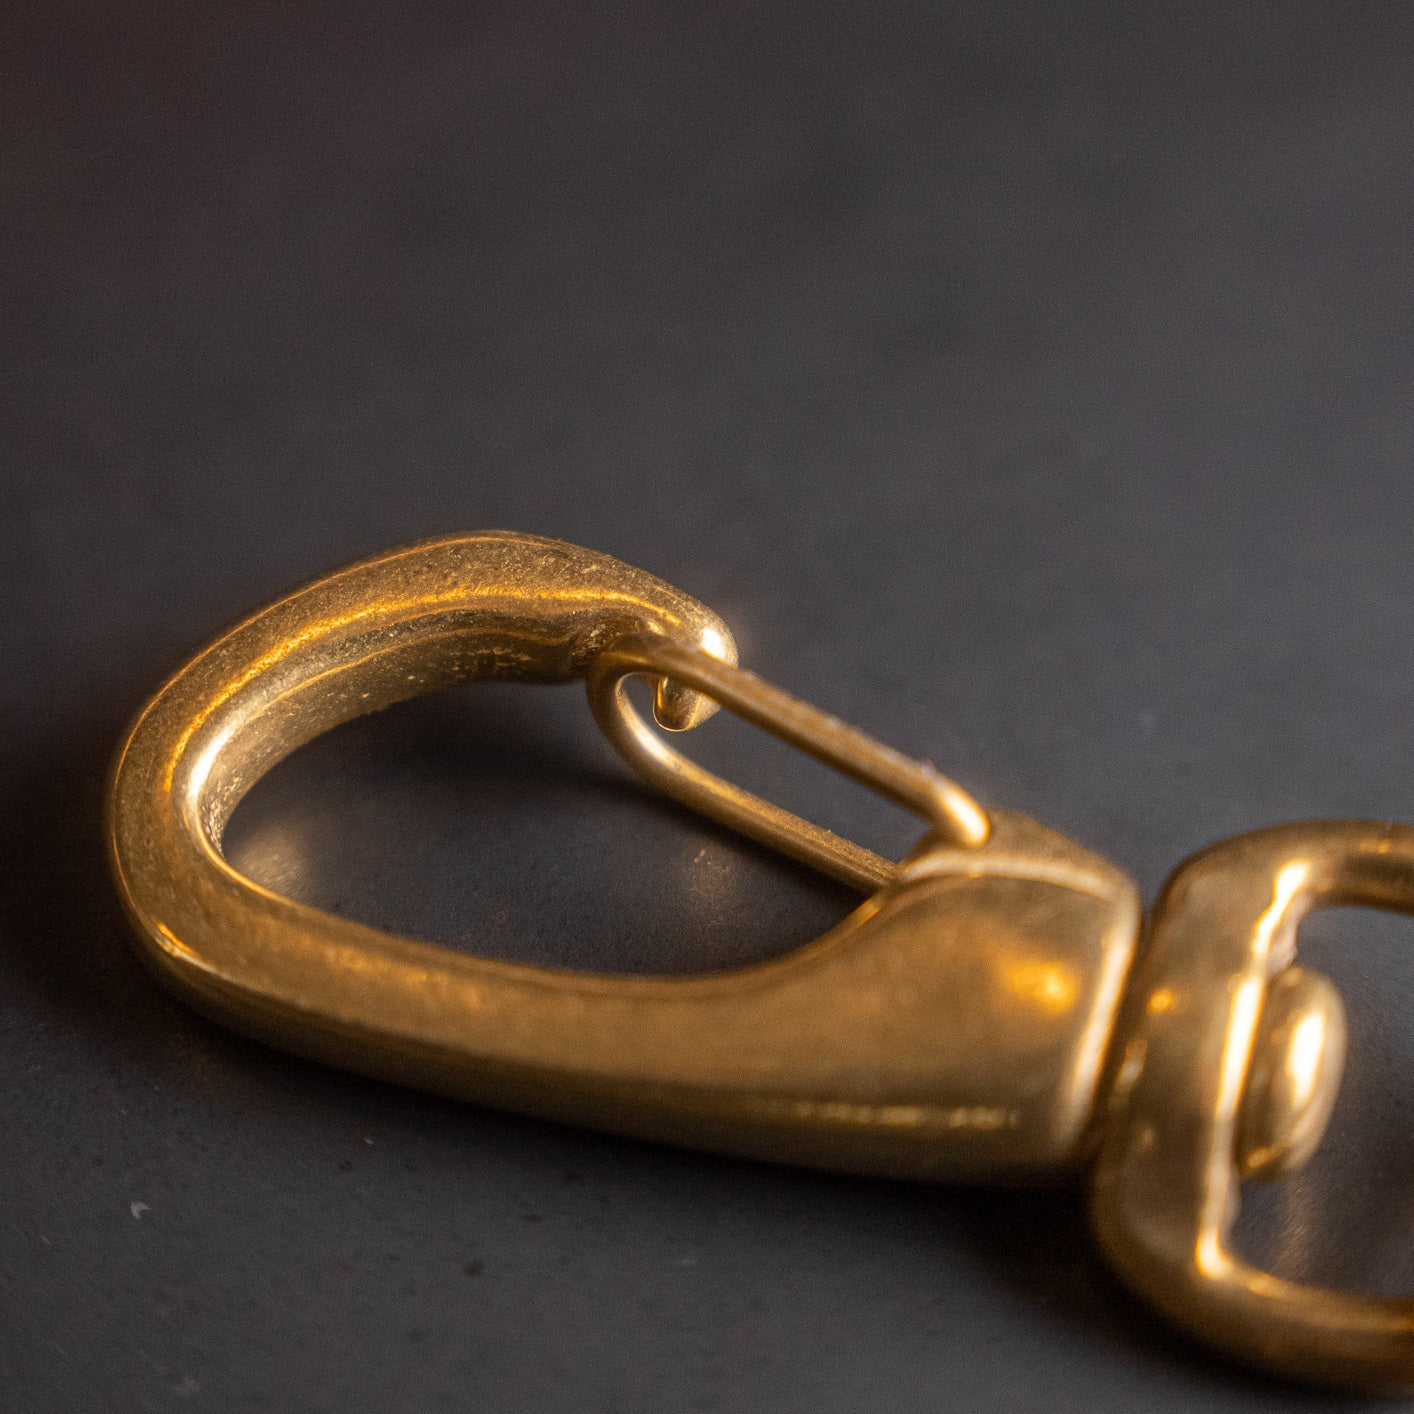 Bracelet Clasp - Japanese S Hook (Solid Brass)